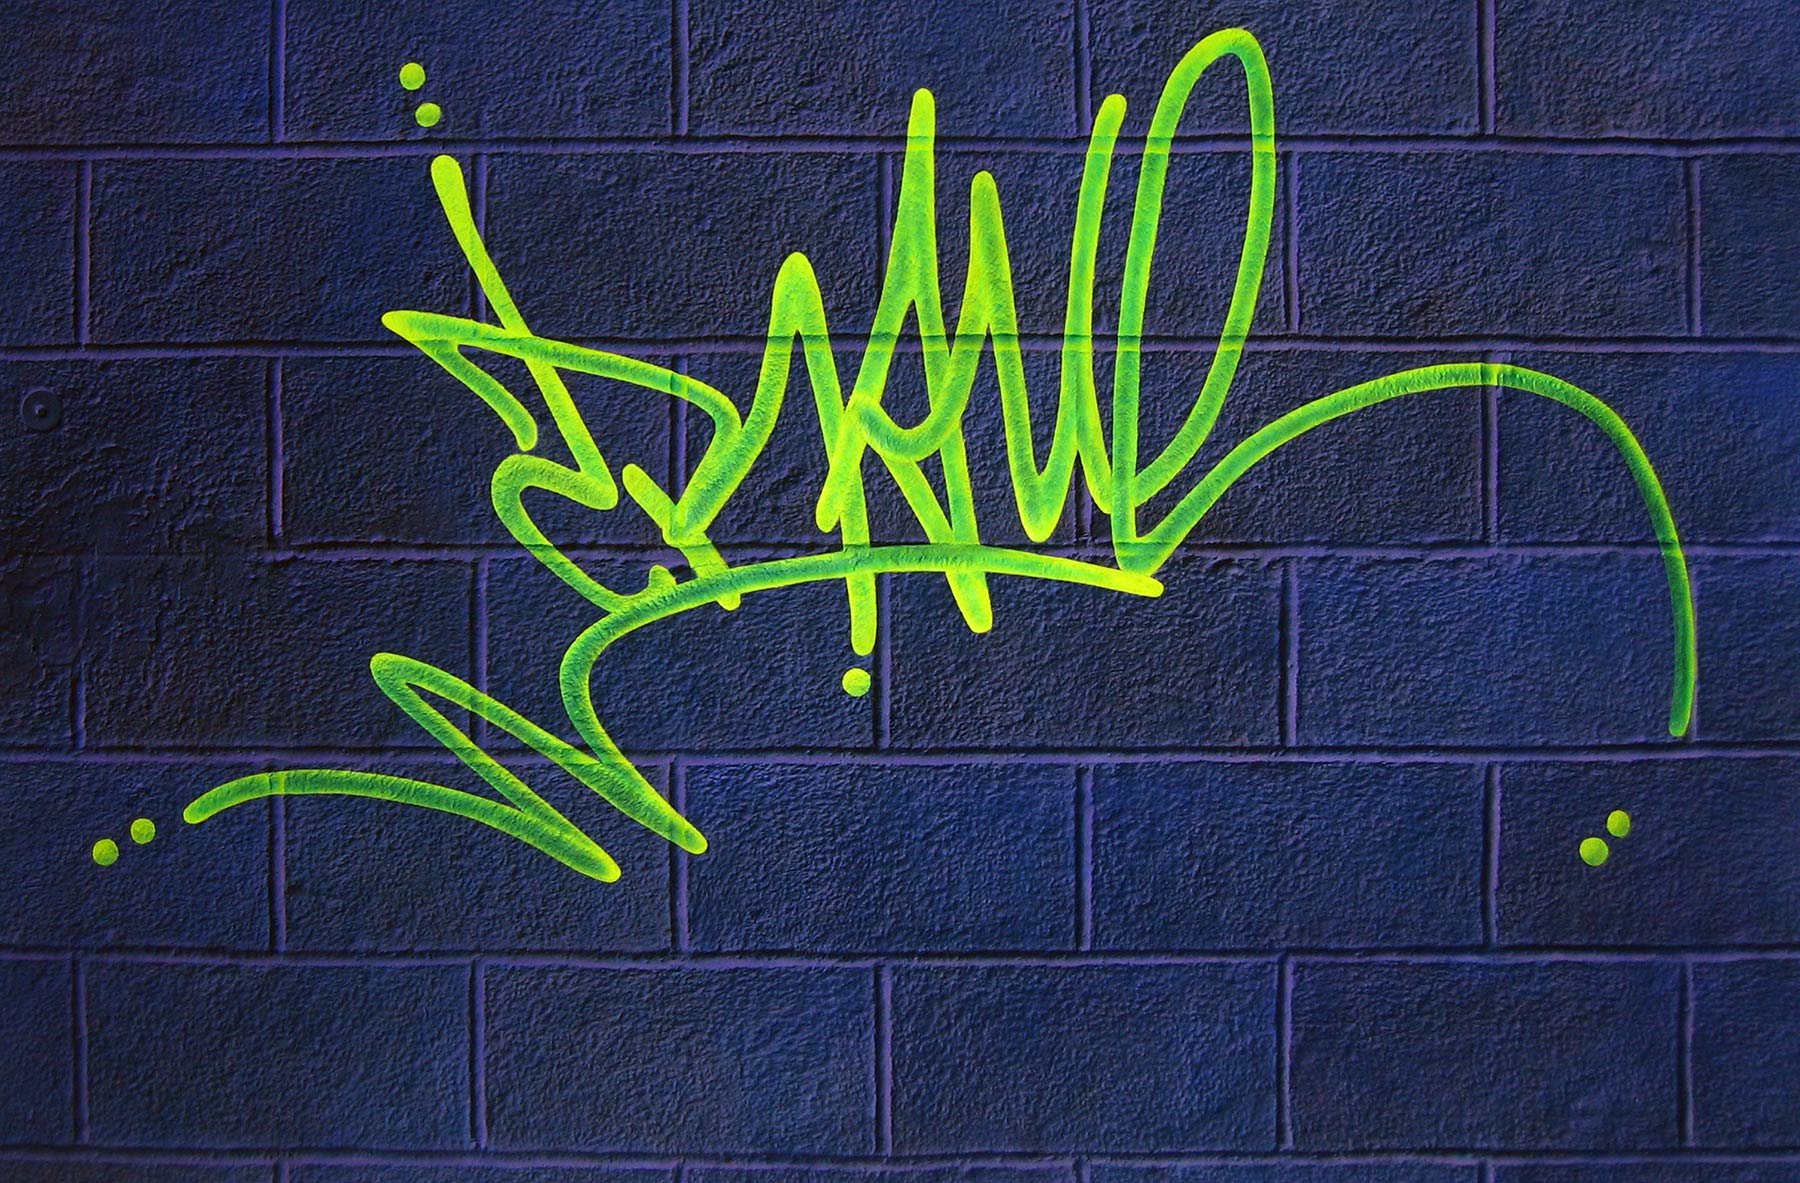 Tag's. Теги граффити. Теги на стенах. Граффити роспись. Граффити Теги на стенах.